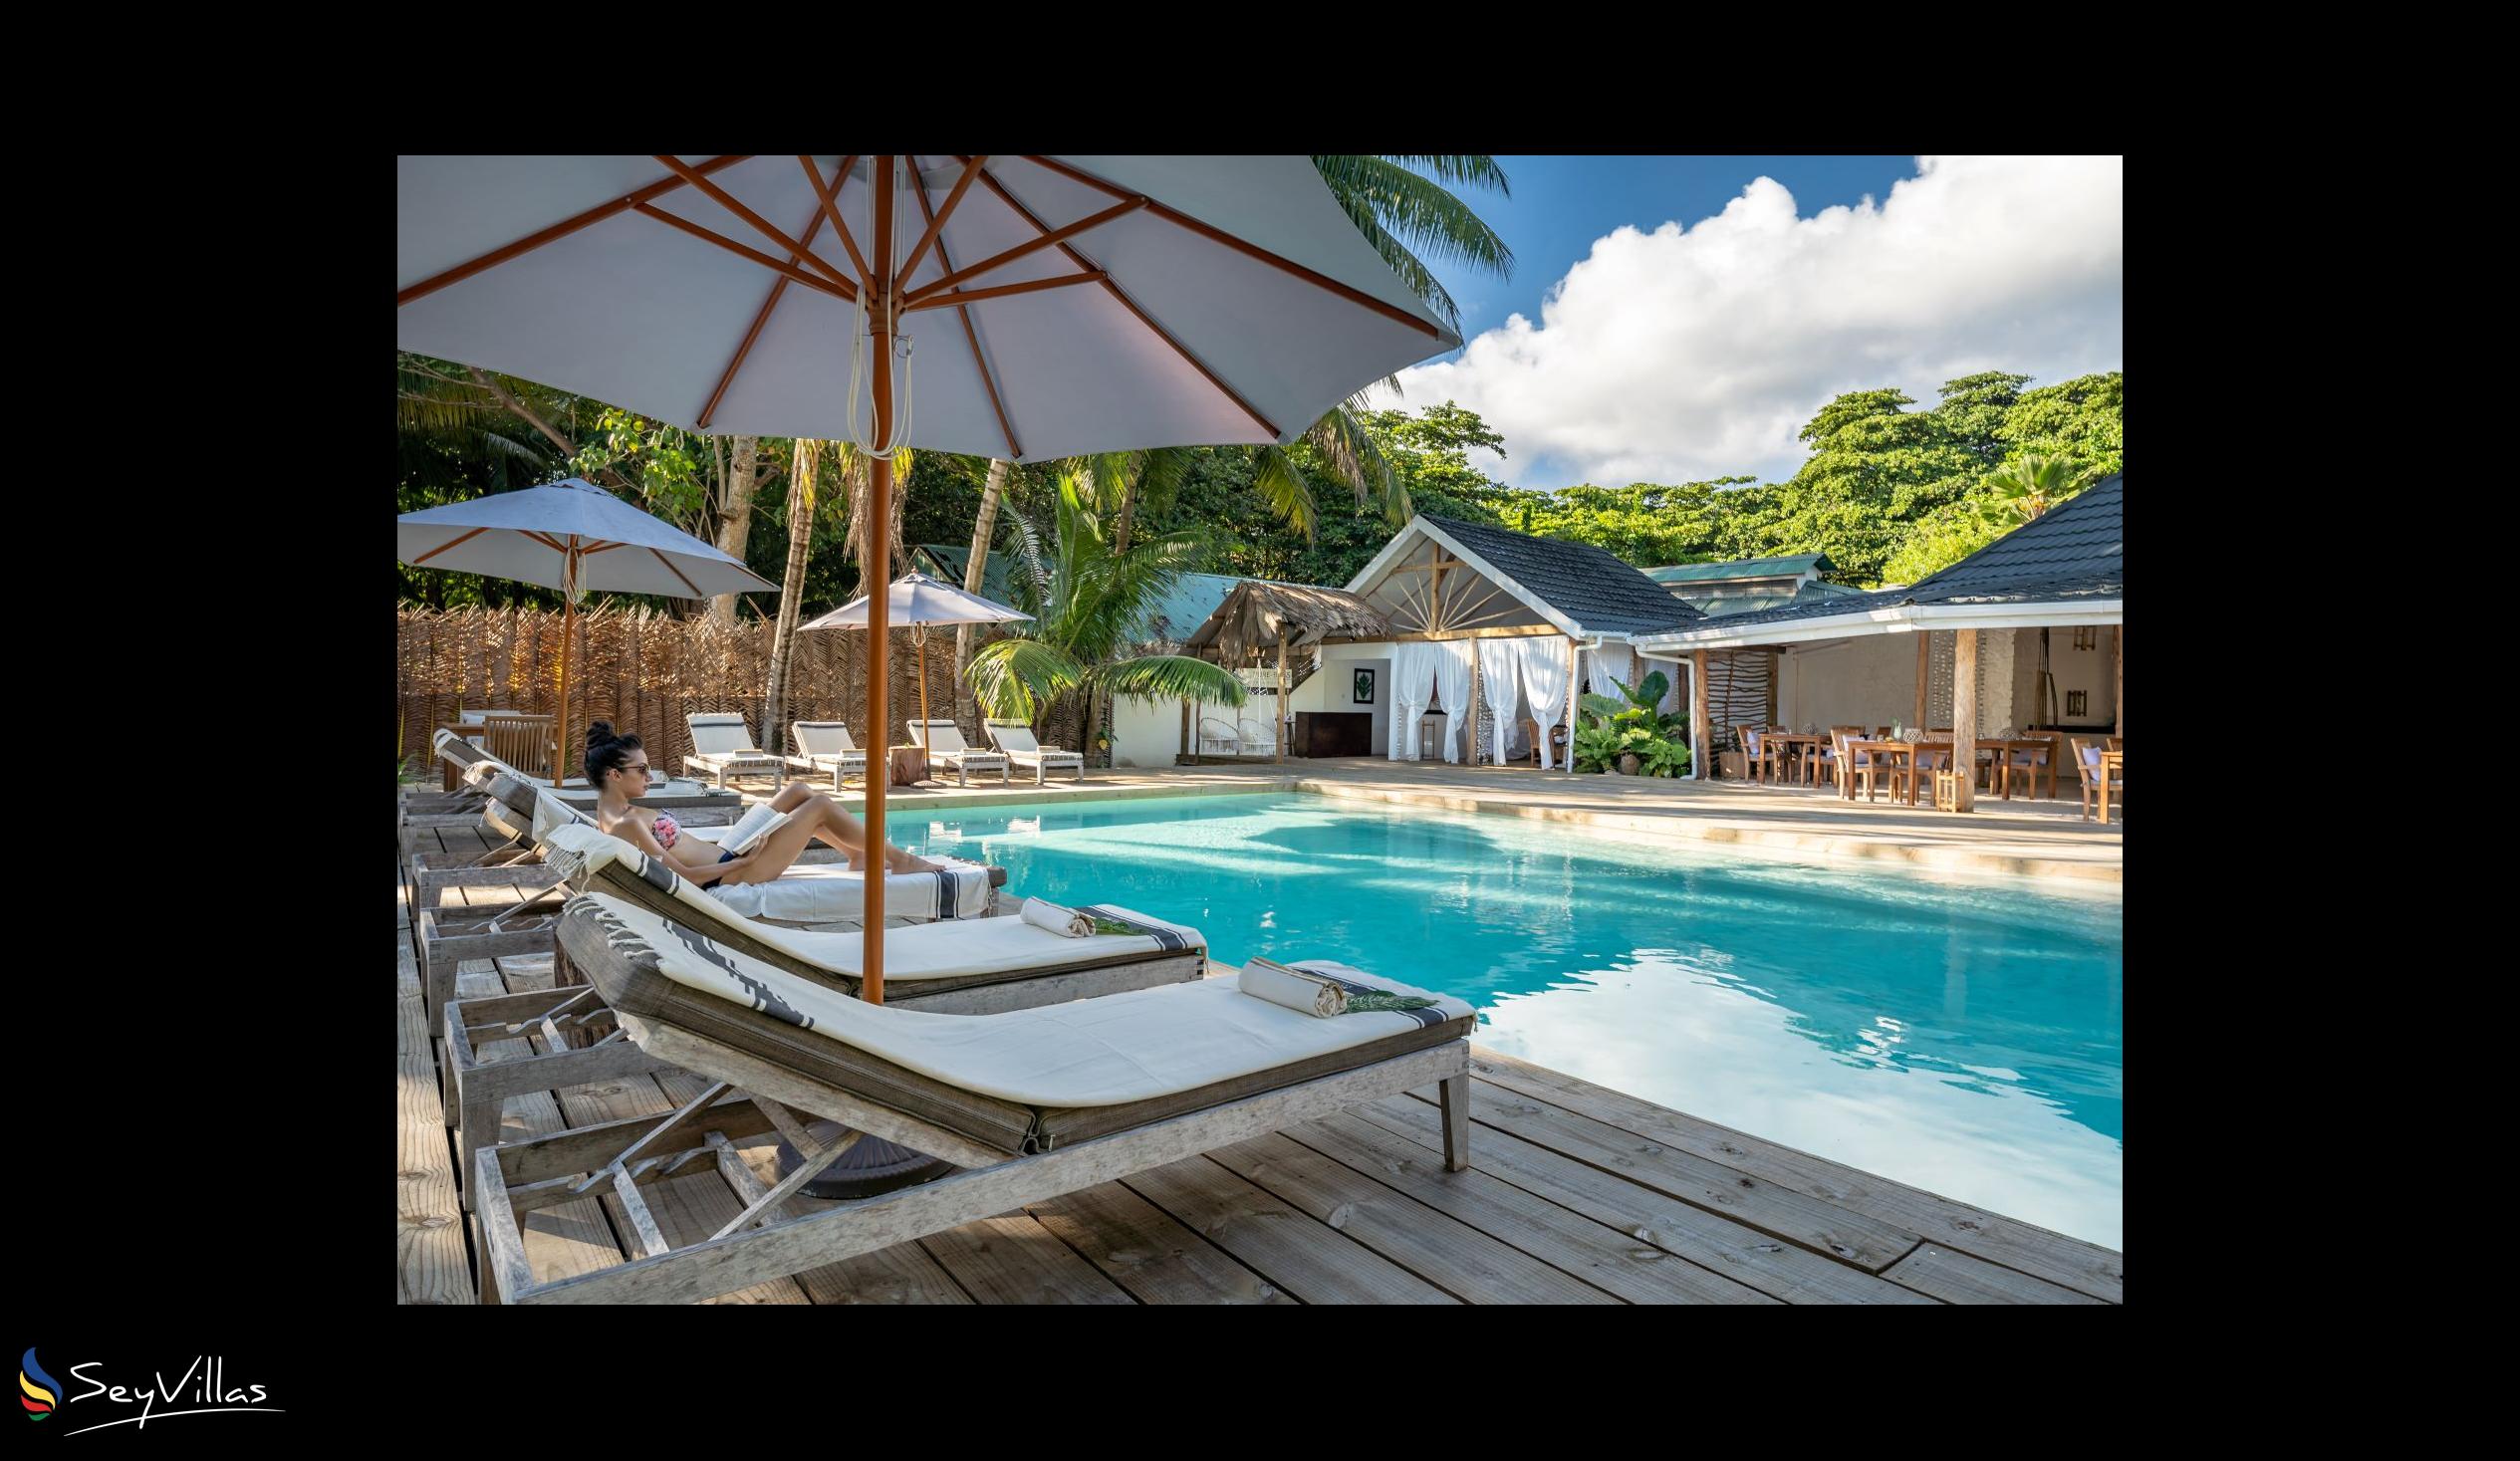 Photo 8: Bliss Hotel Praslin - Outdoor area - Praslin (Seychelles)